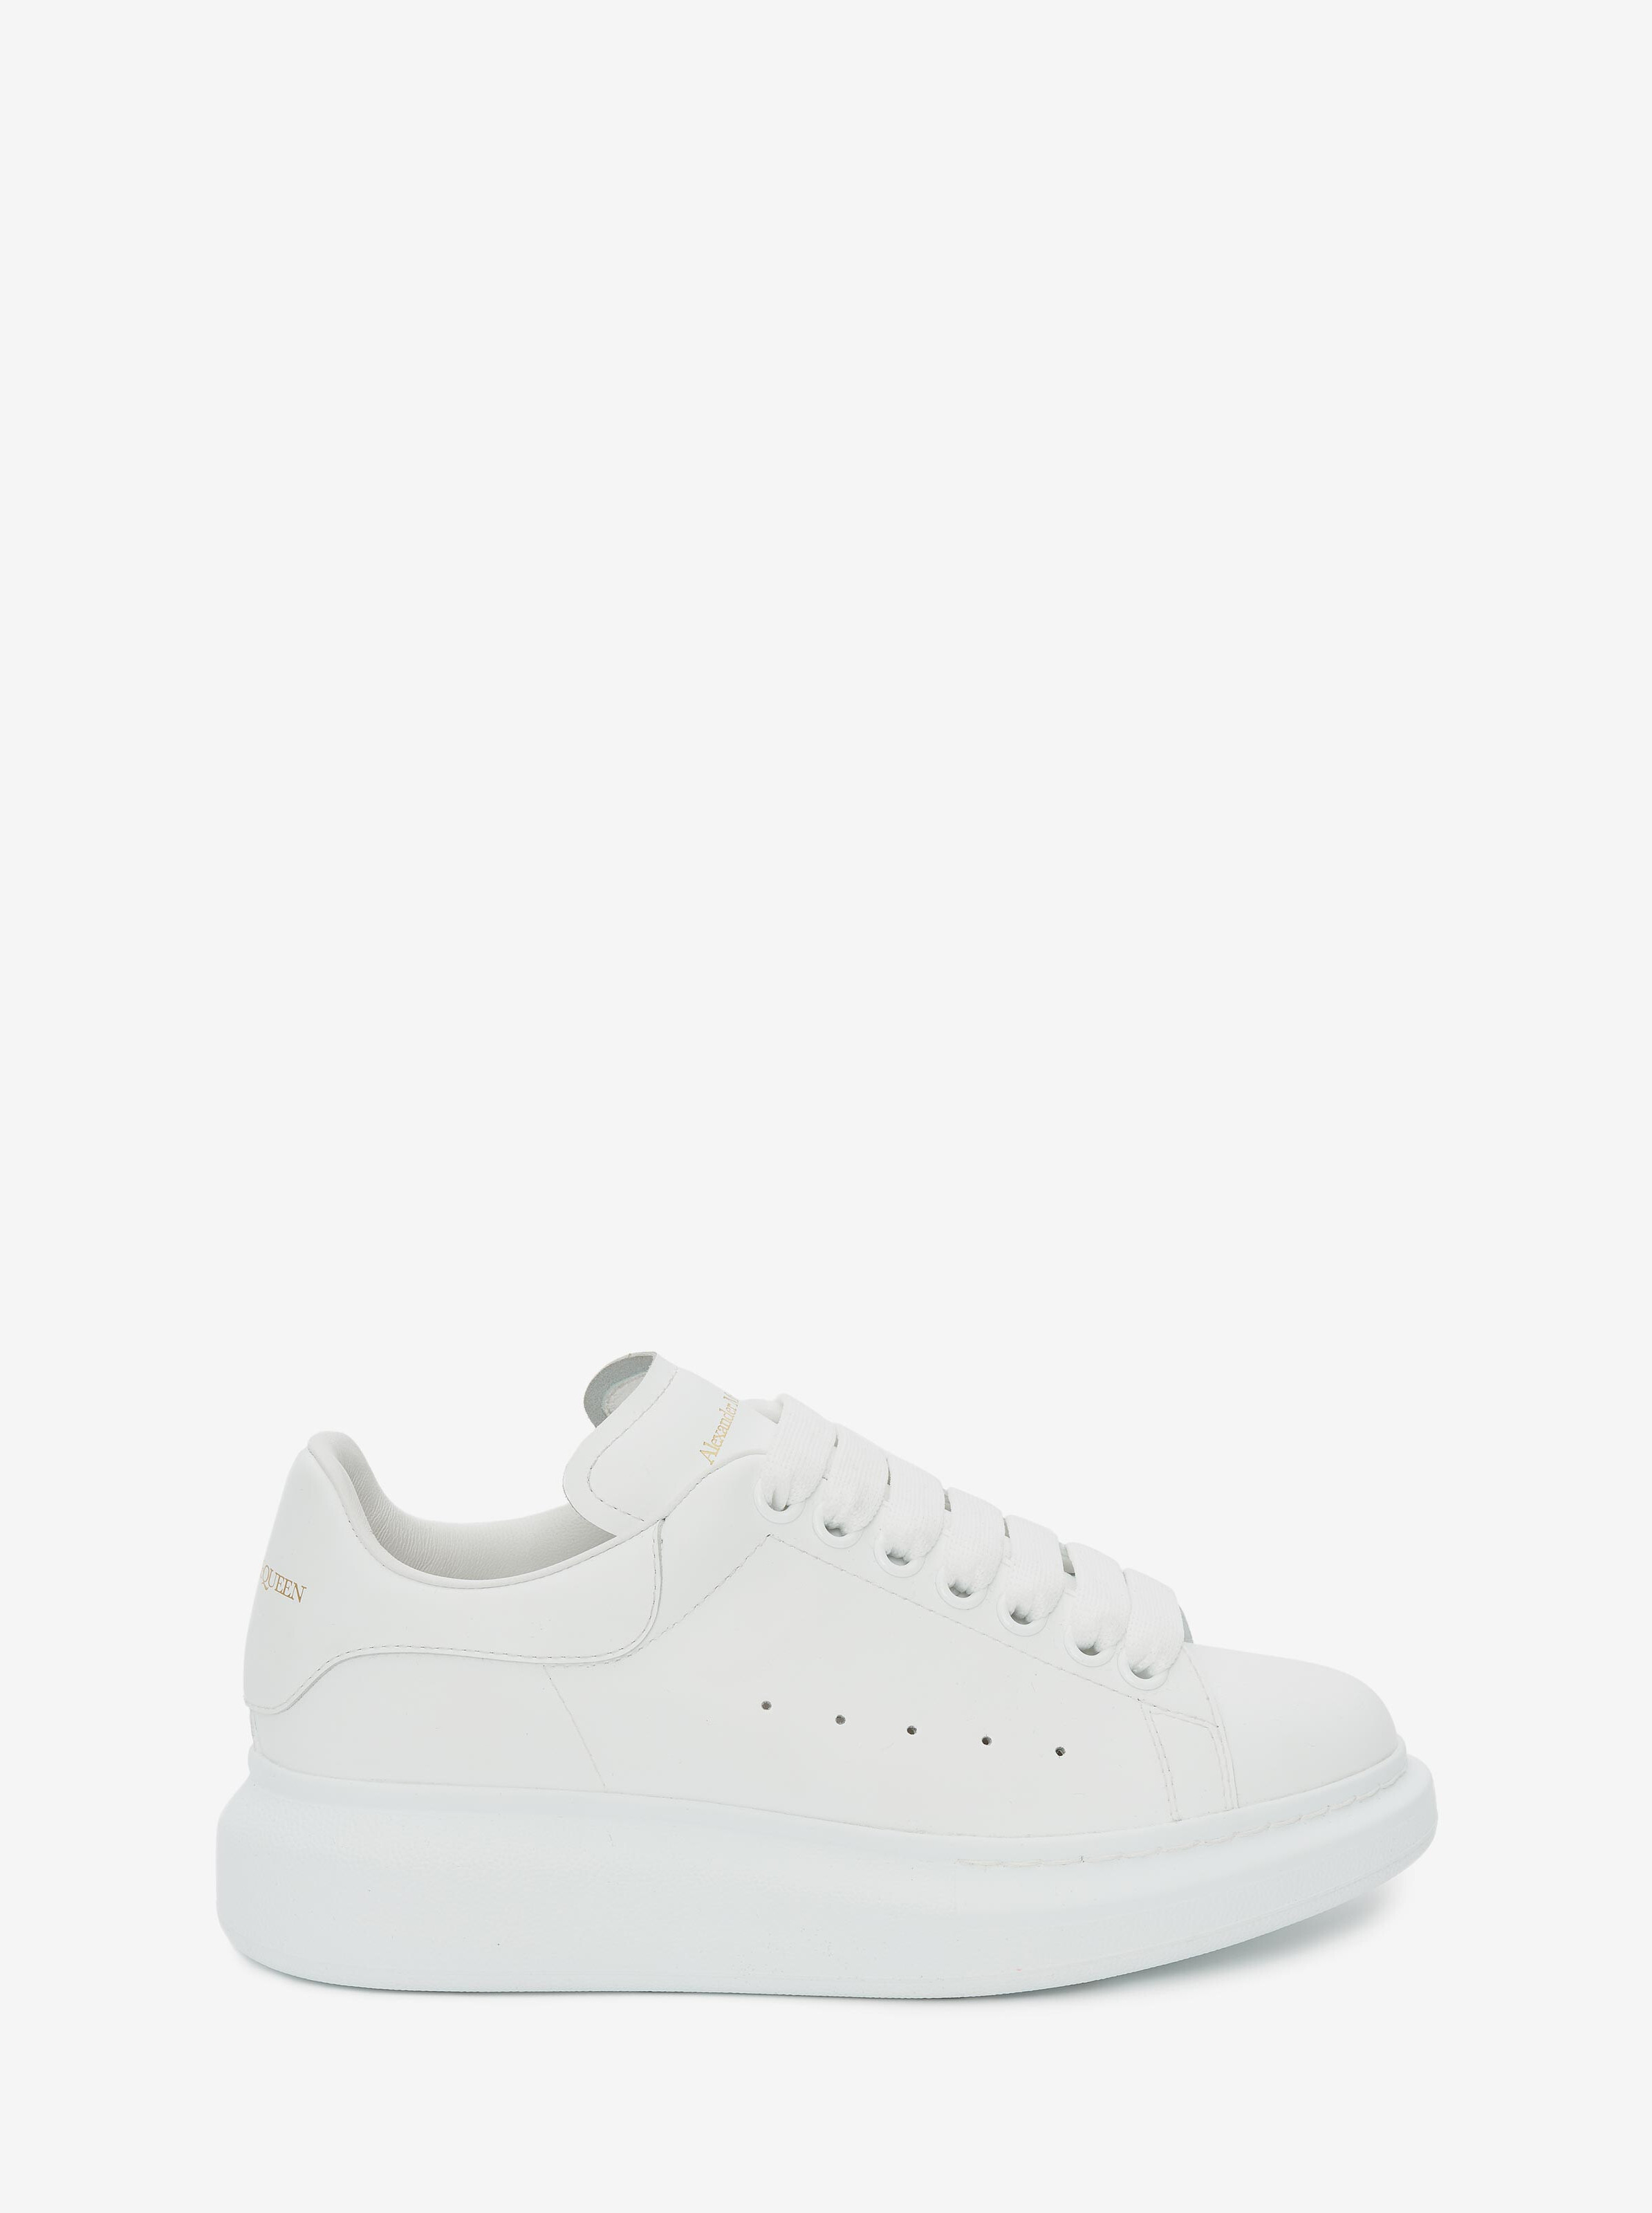 Oversized Sneaker in White, Alexander McQueen, Rs 48900 